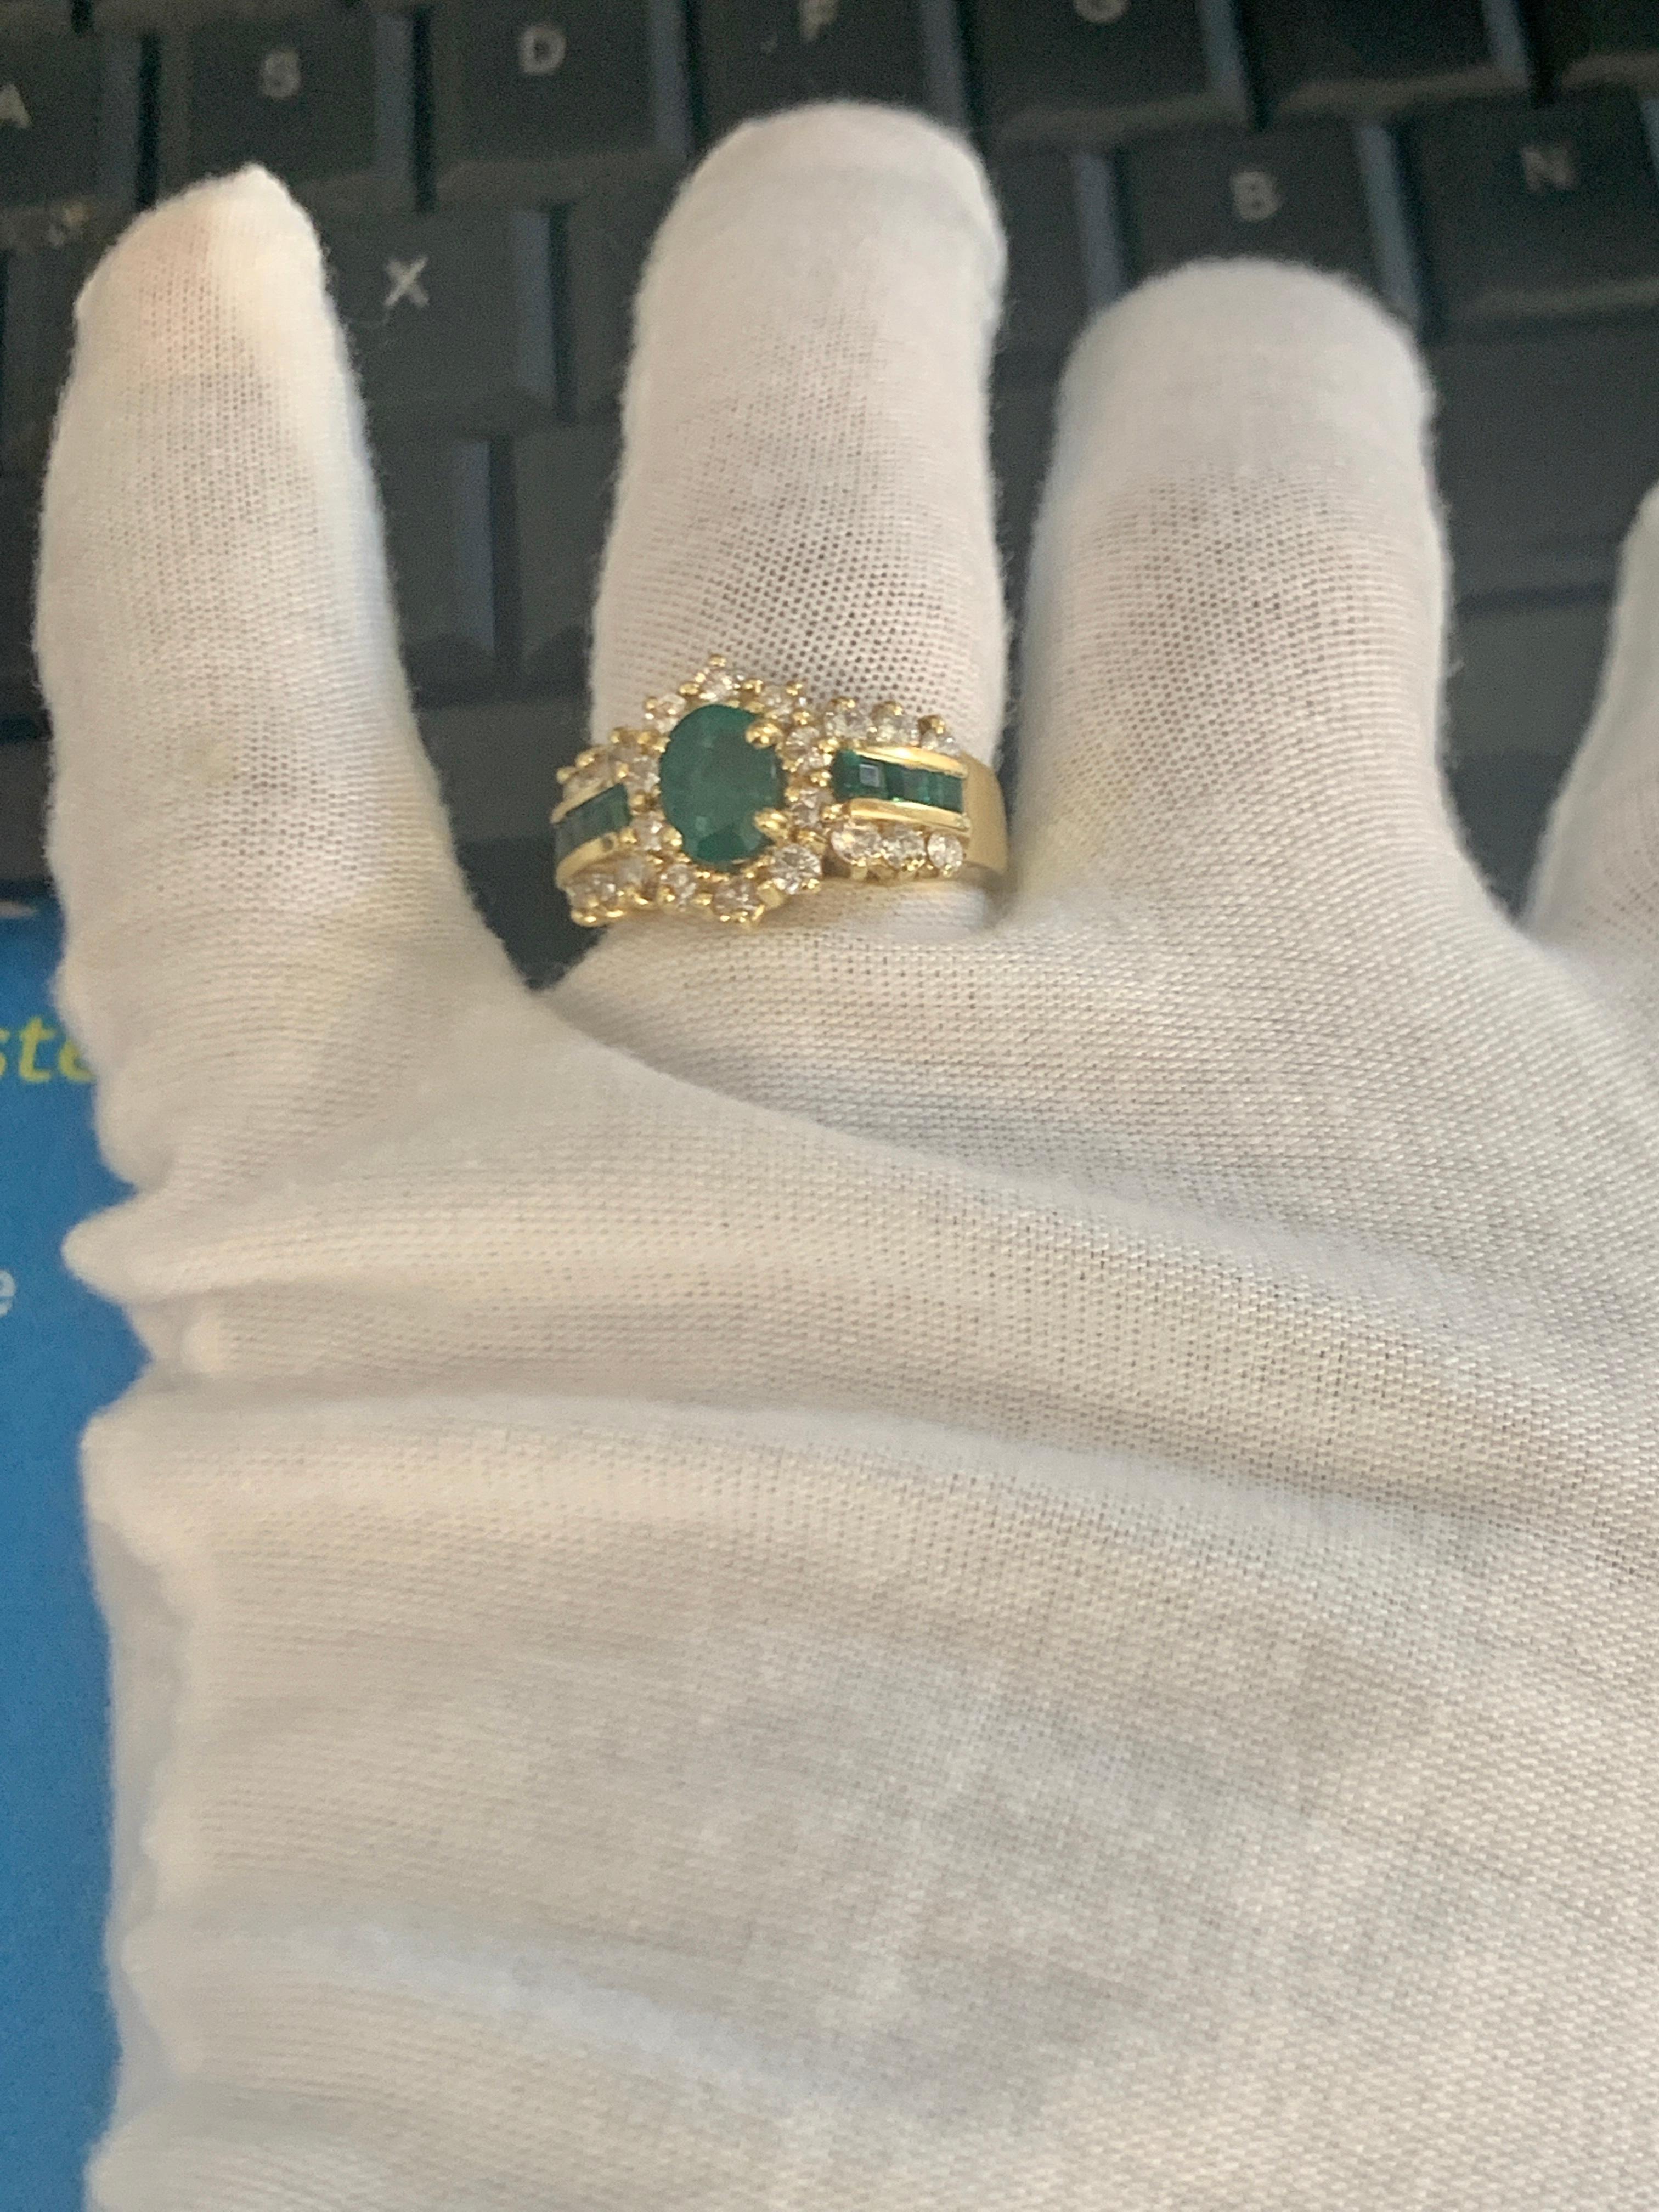 1 Carat Oval Cut Emerald and 1.0 Carat Diamond Ring 18 Karat Yellow Gold For Sale 3